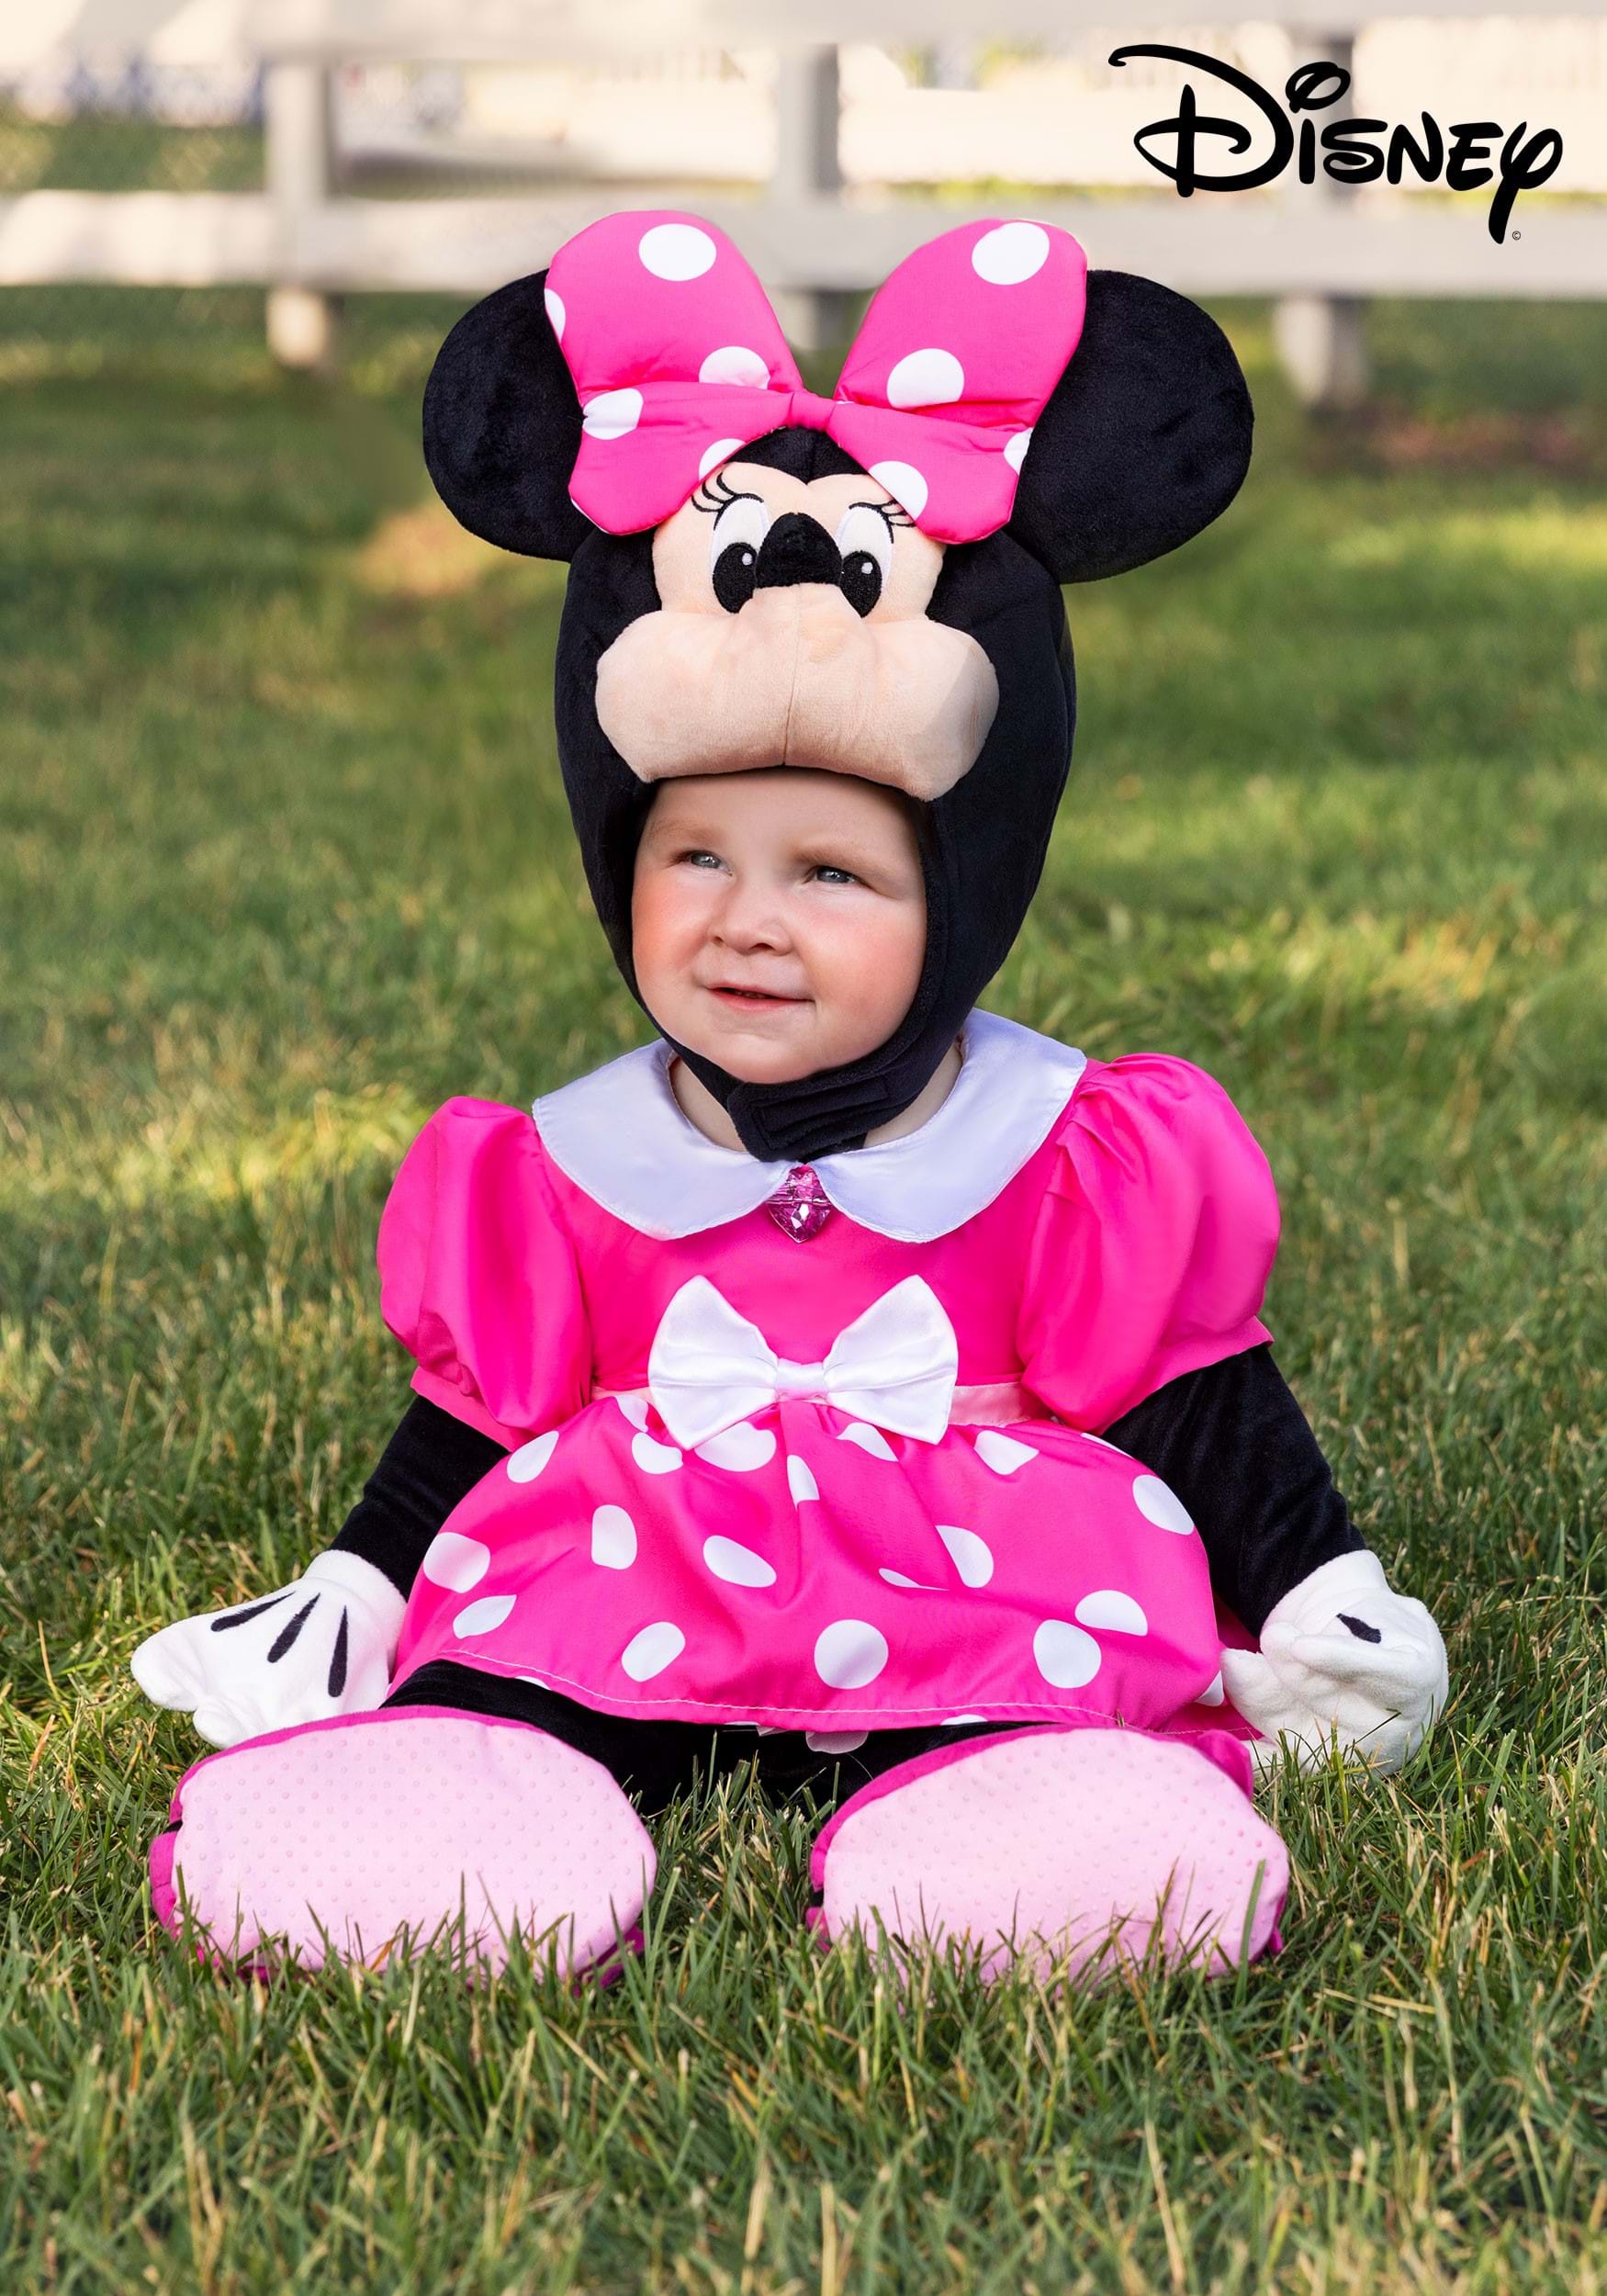 Disney Halloween Mickey and Minnie Lets Party Mug